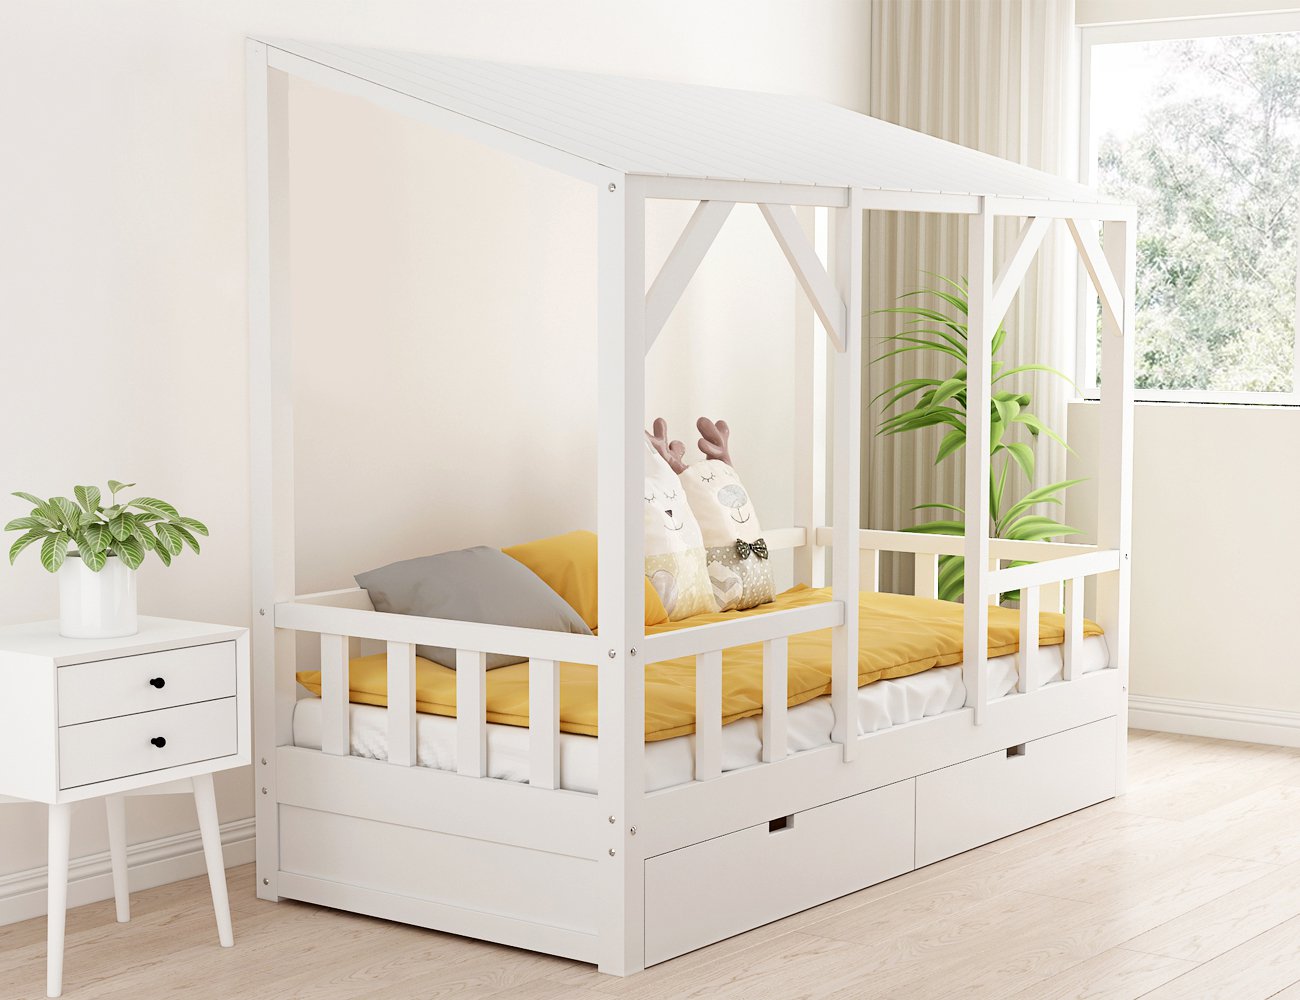 Lina Kids Single Bed Frame Mattress Set Crazy Sales We Have The